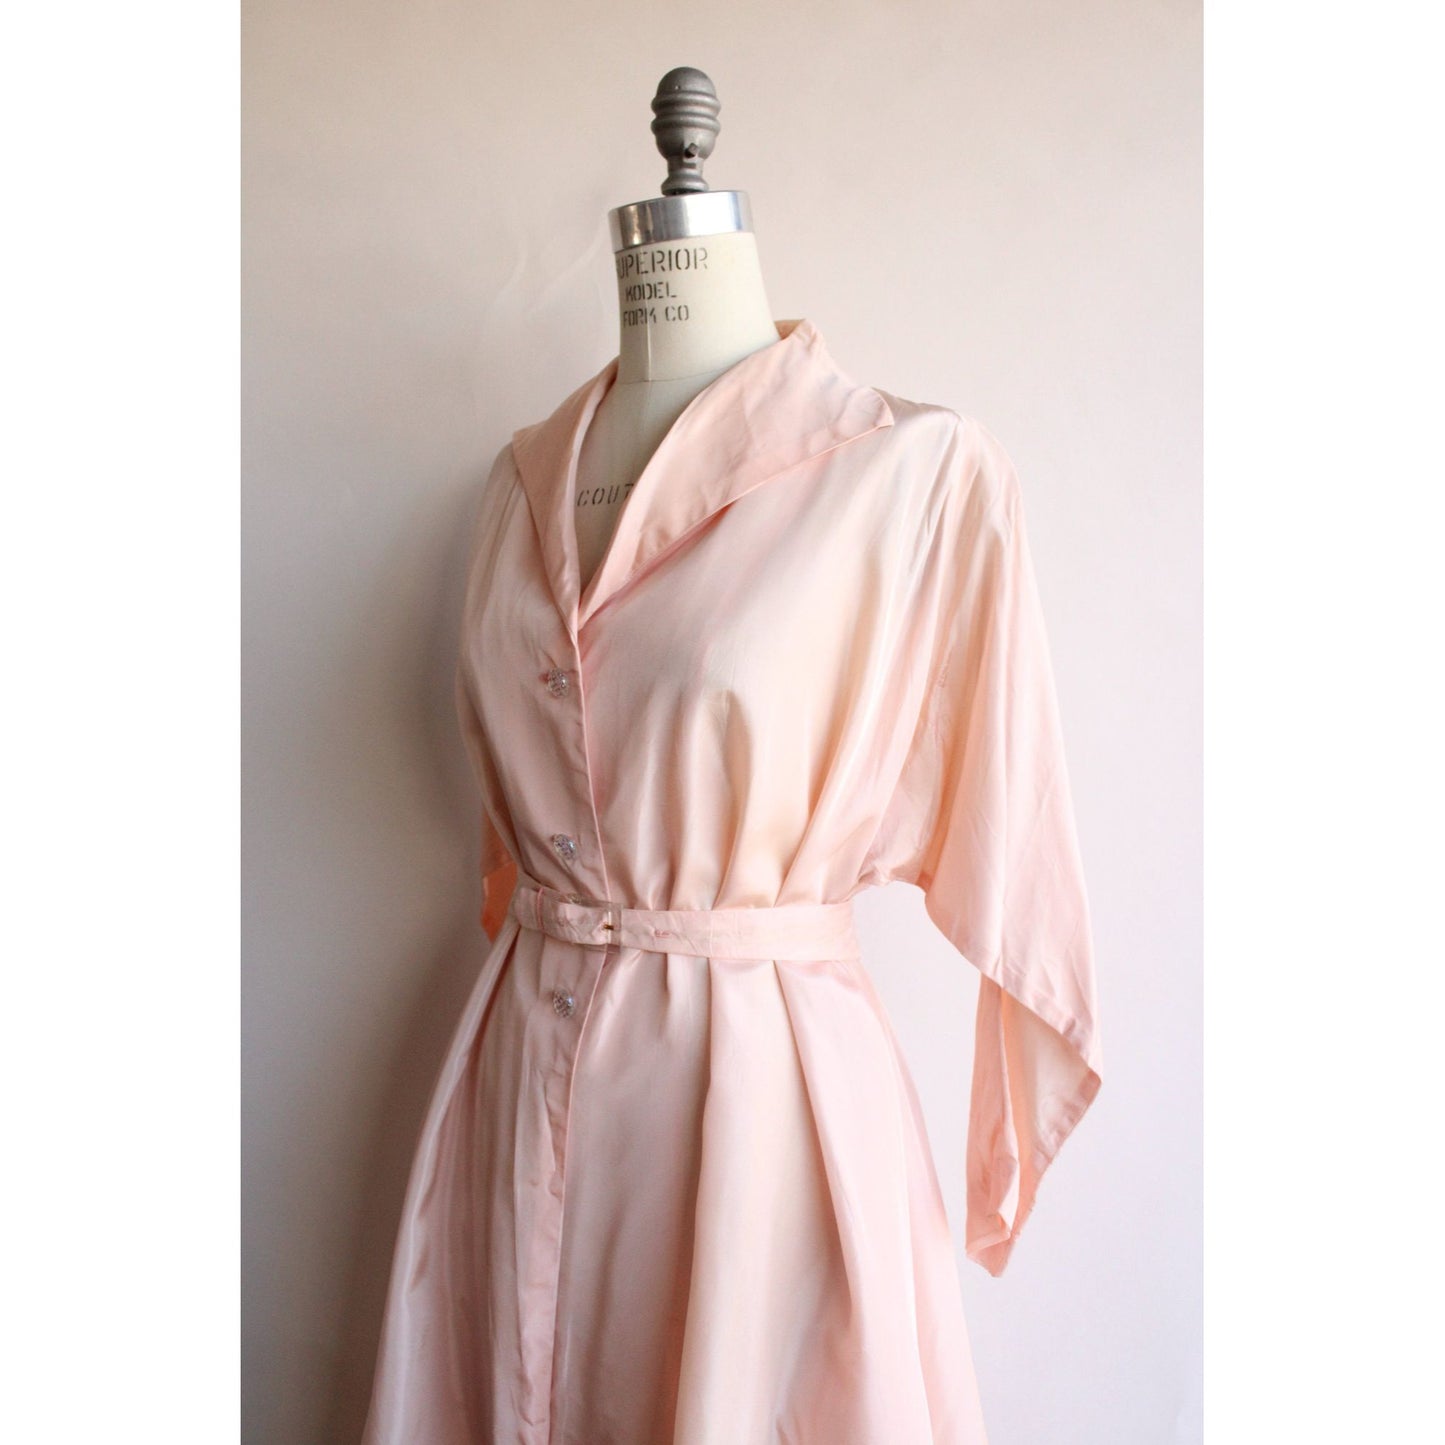 Vintage 1960s Pink Coat with Belt